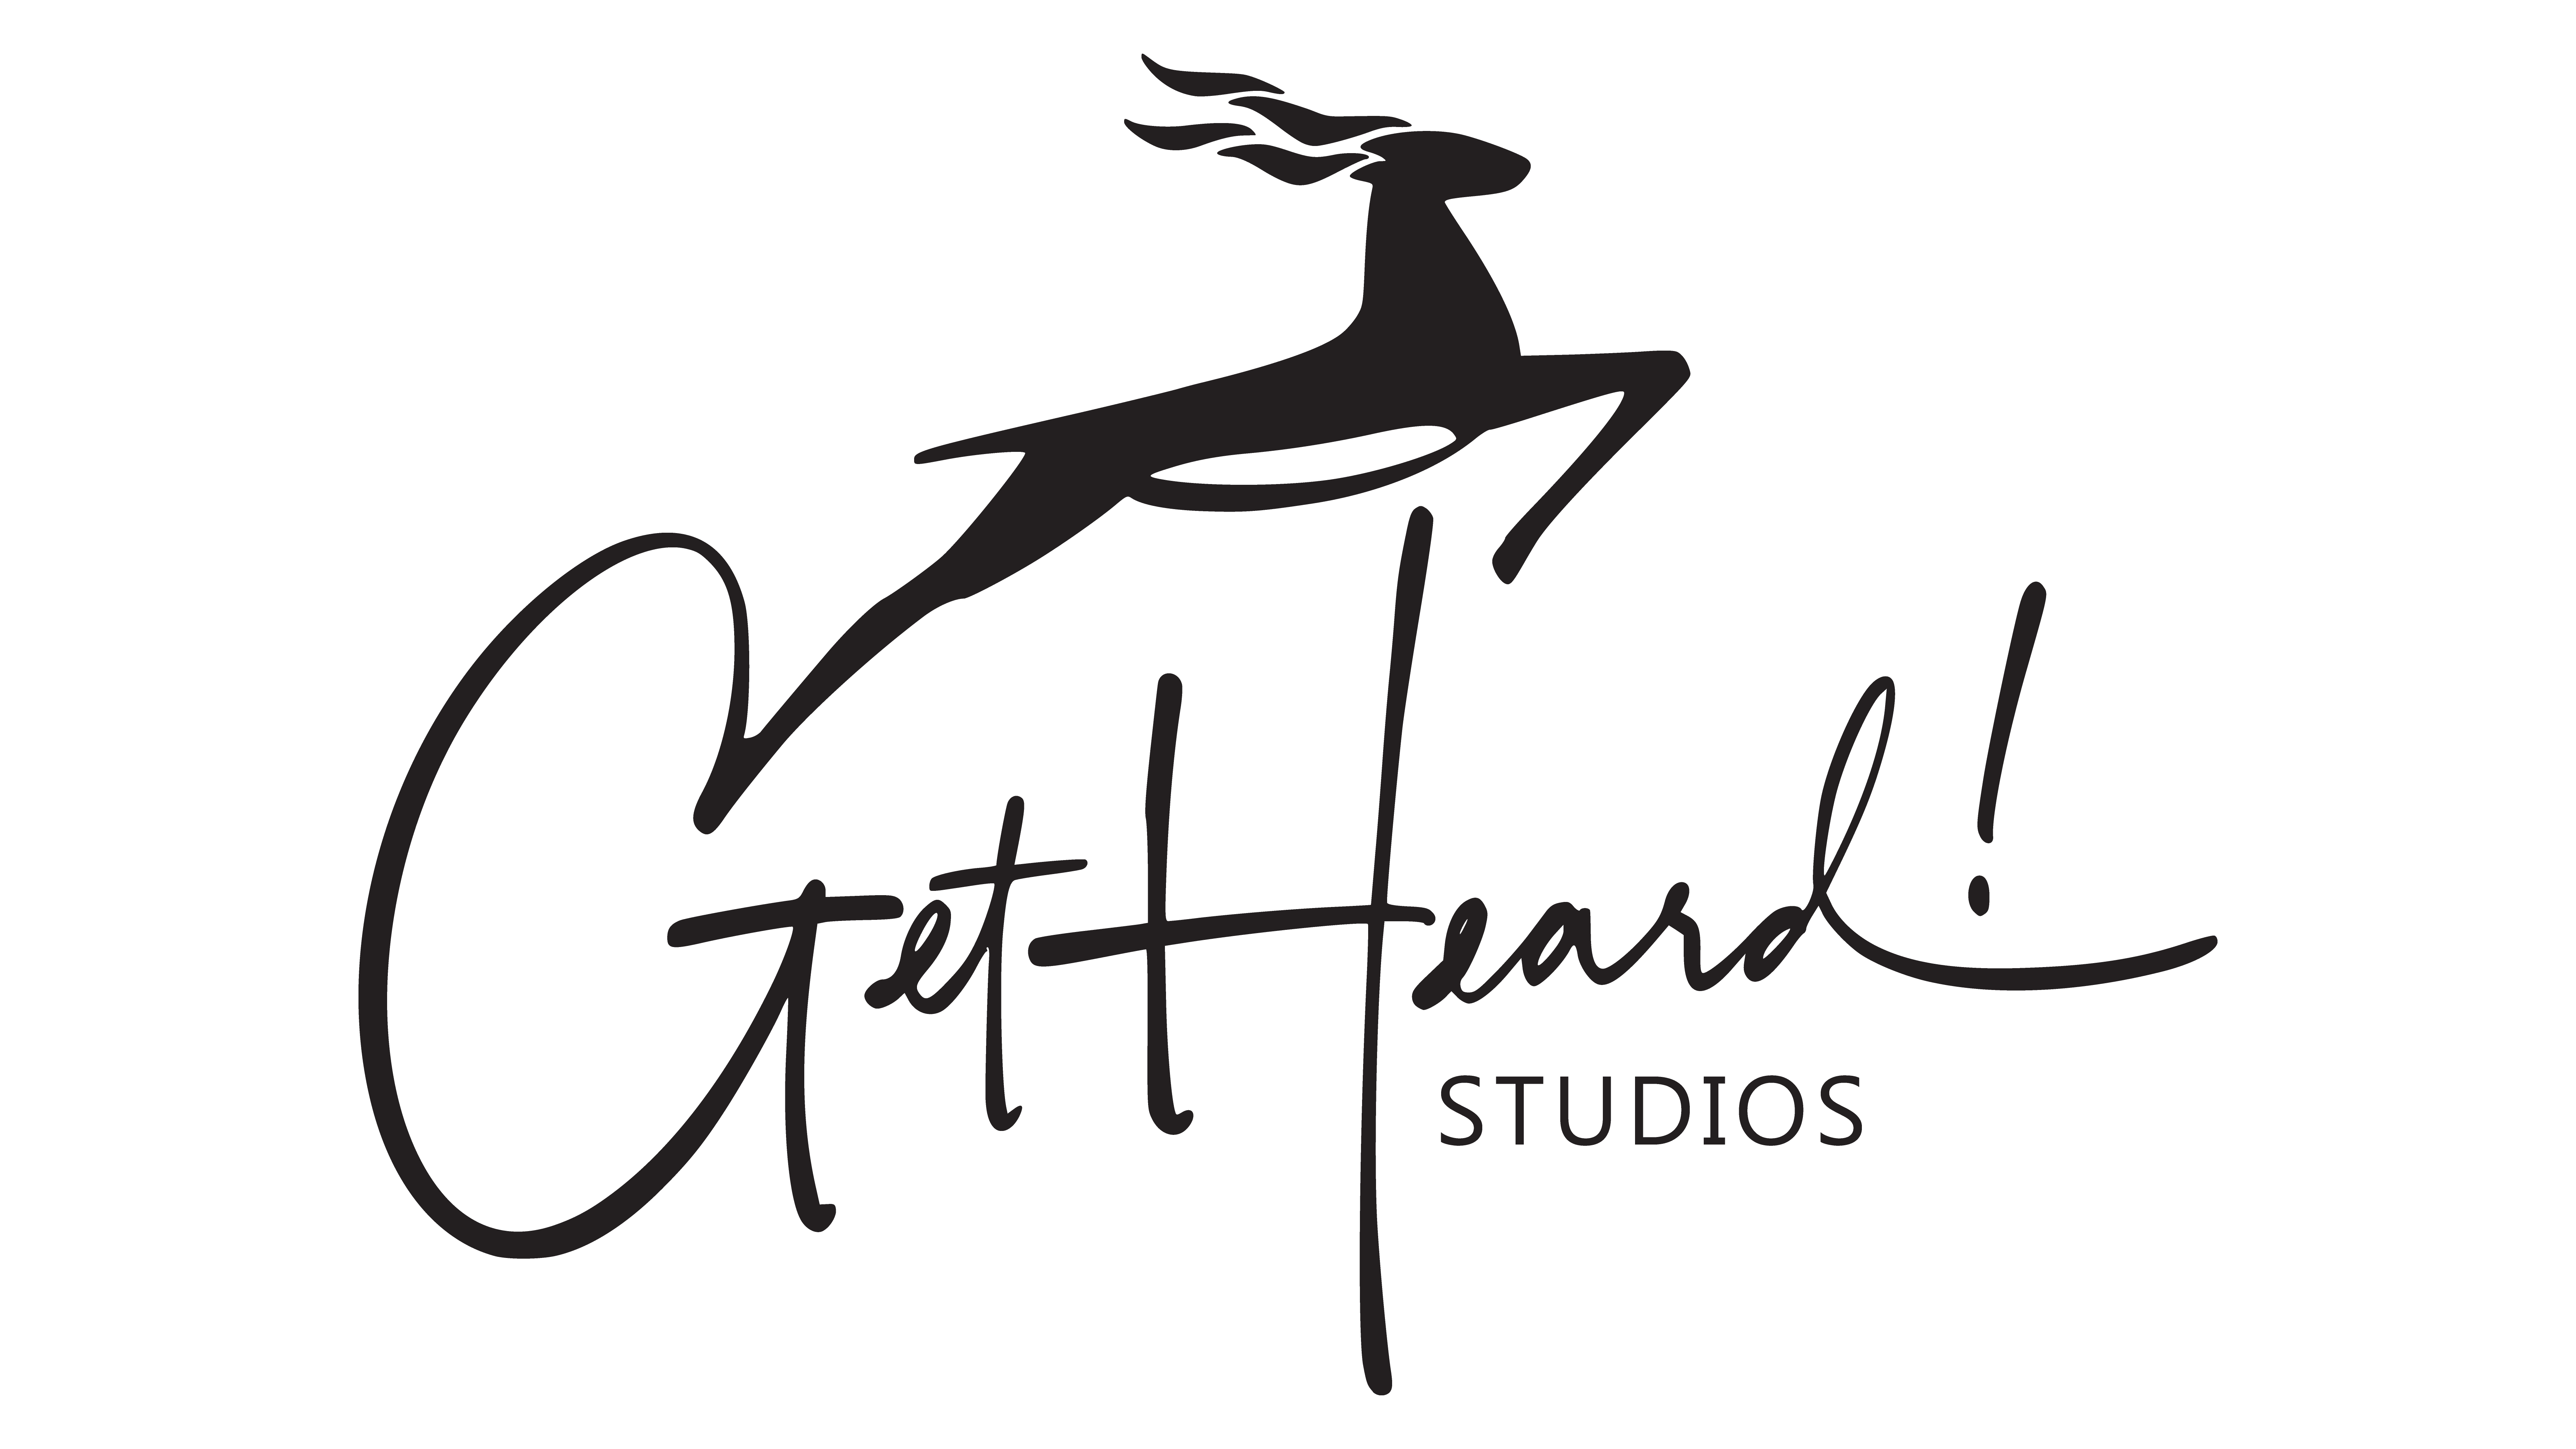 Get-Heard-signature-logo-icon-studios-black-high-res